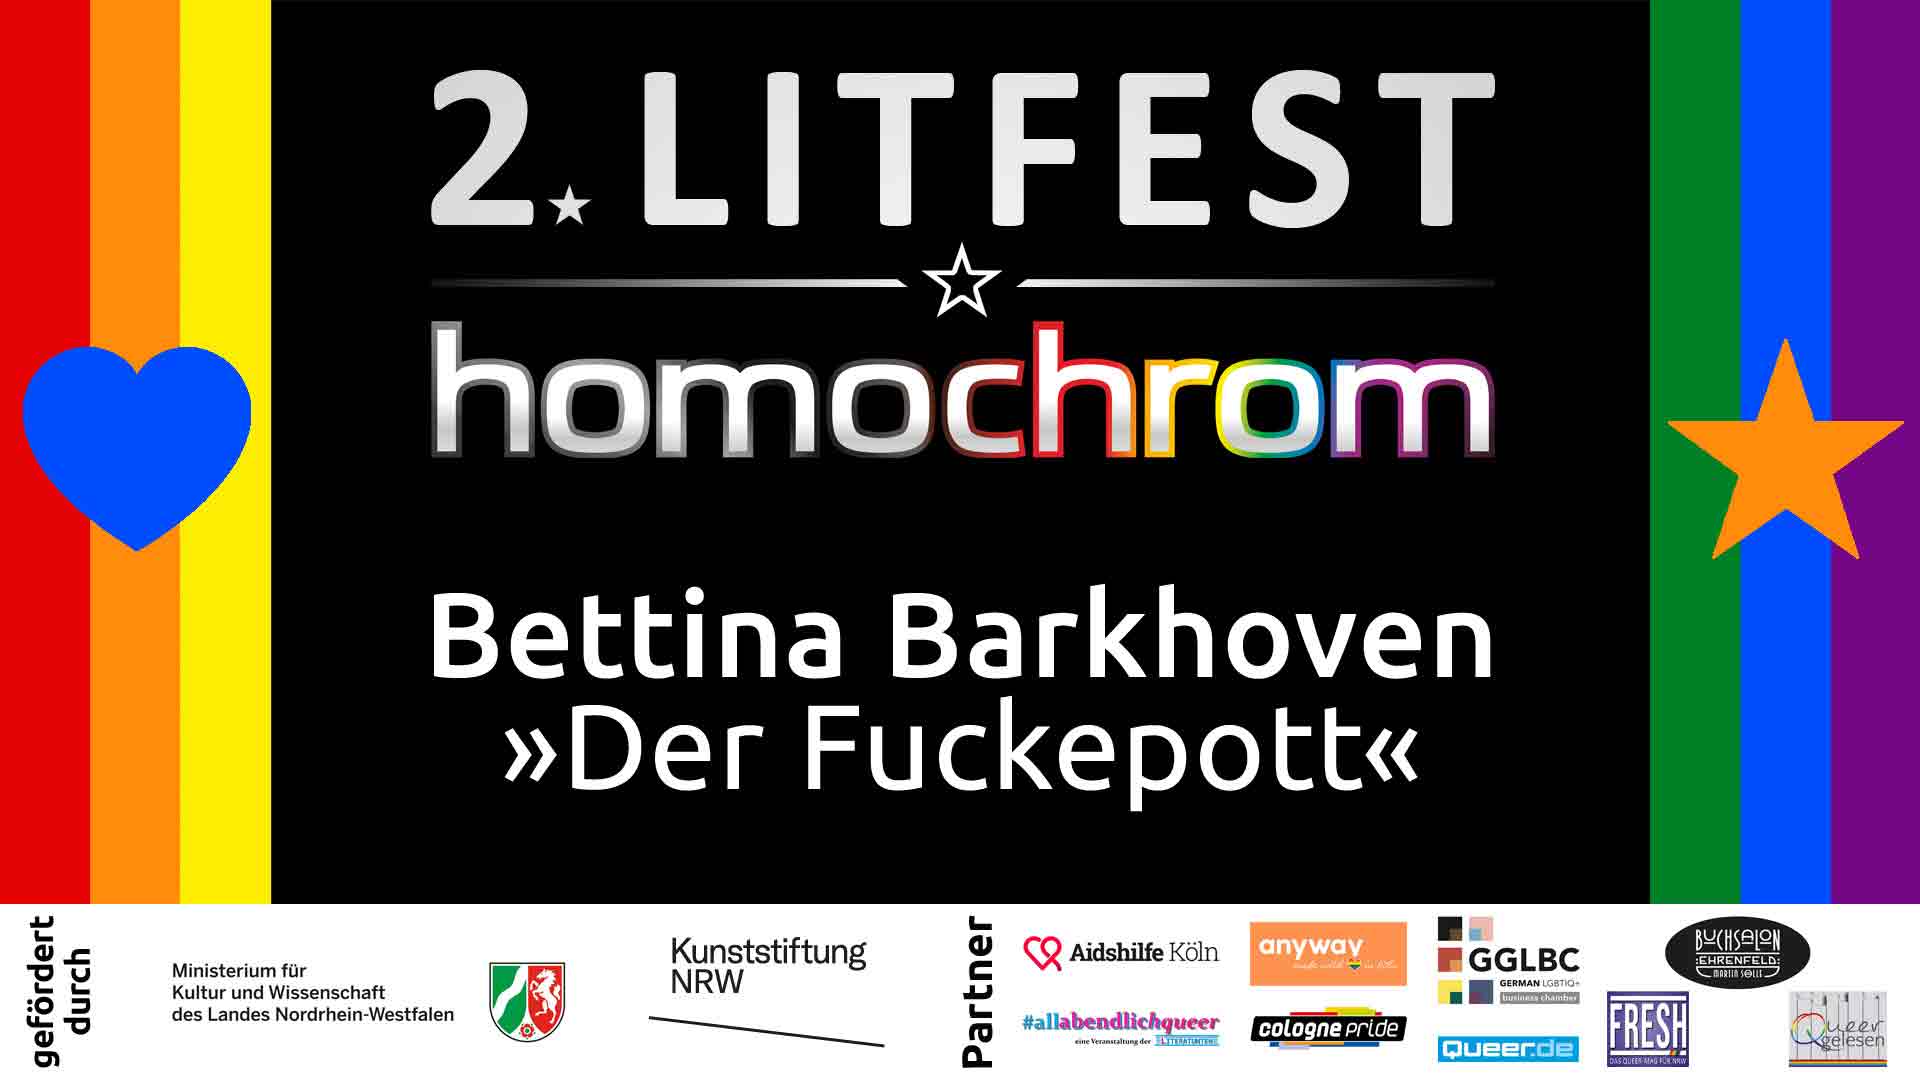 Youtube Video, Bettina Barkhoven, 2. Litfest homochrom